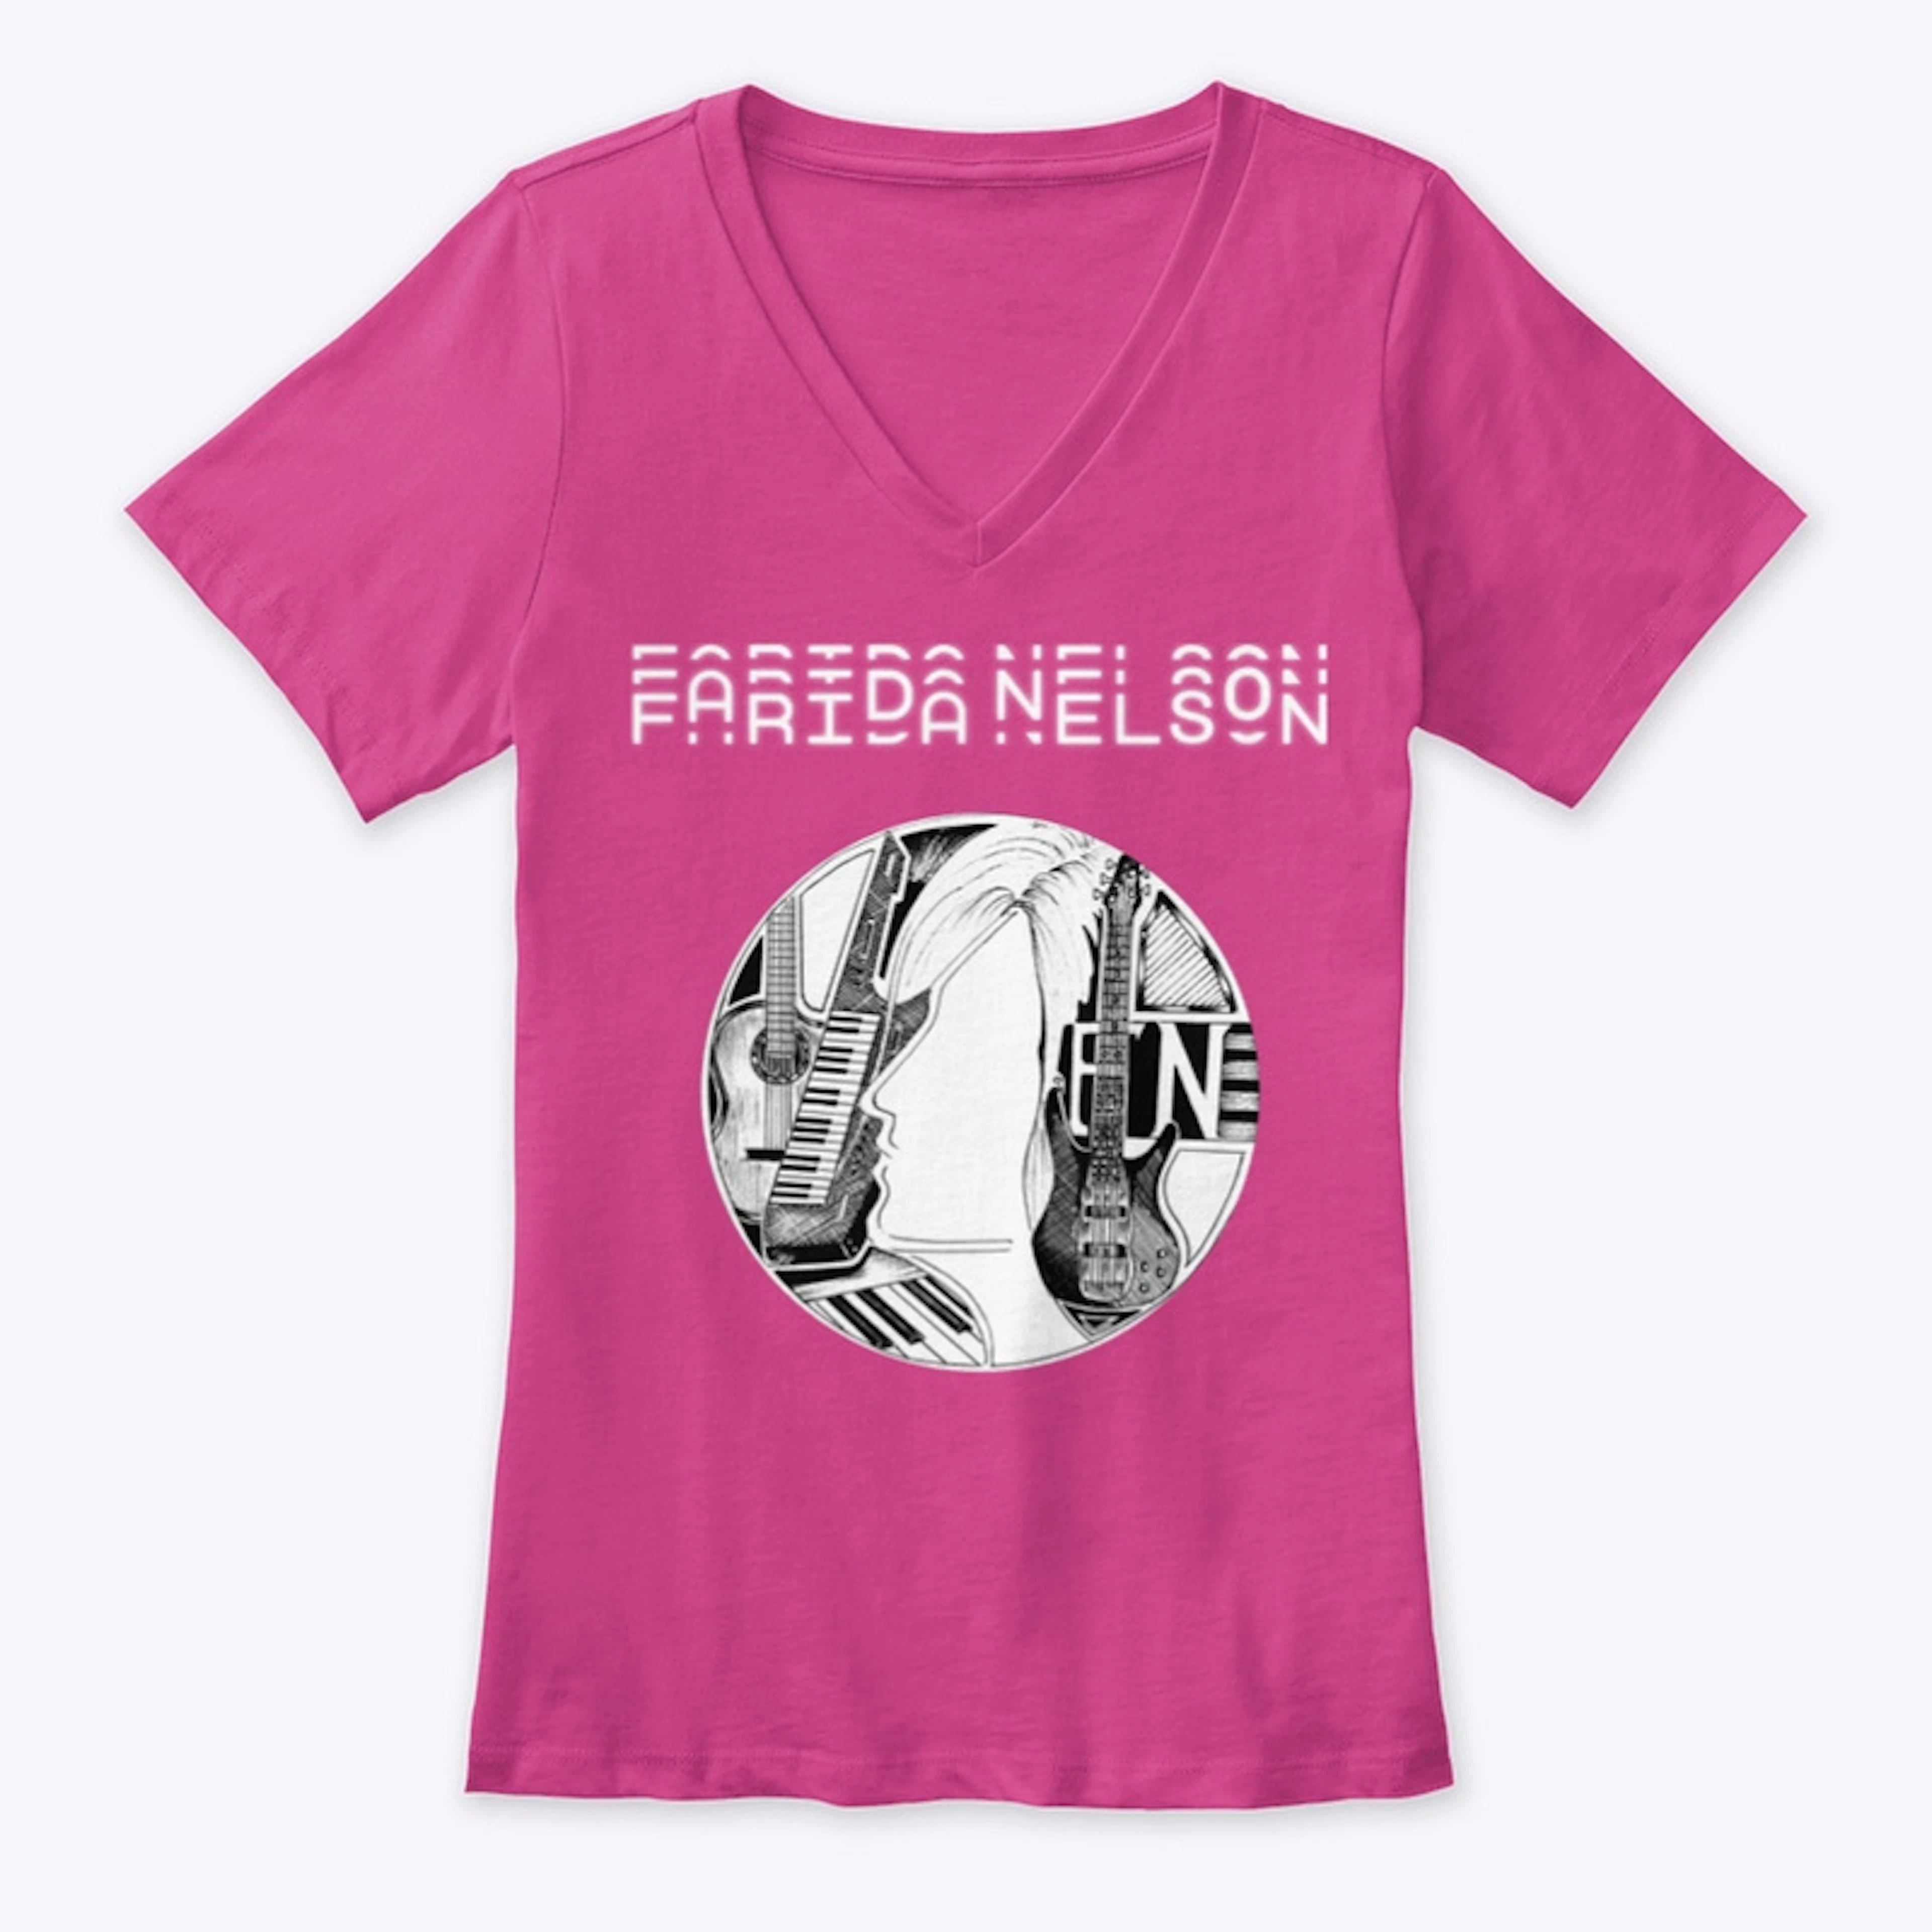 Farida Nelson Basic Collection